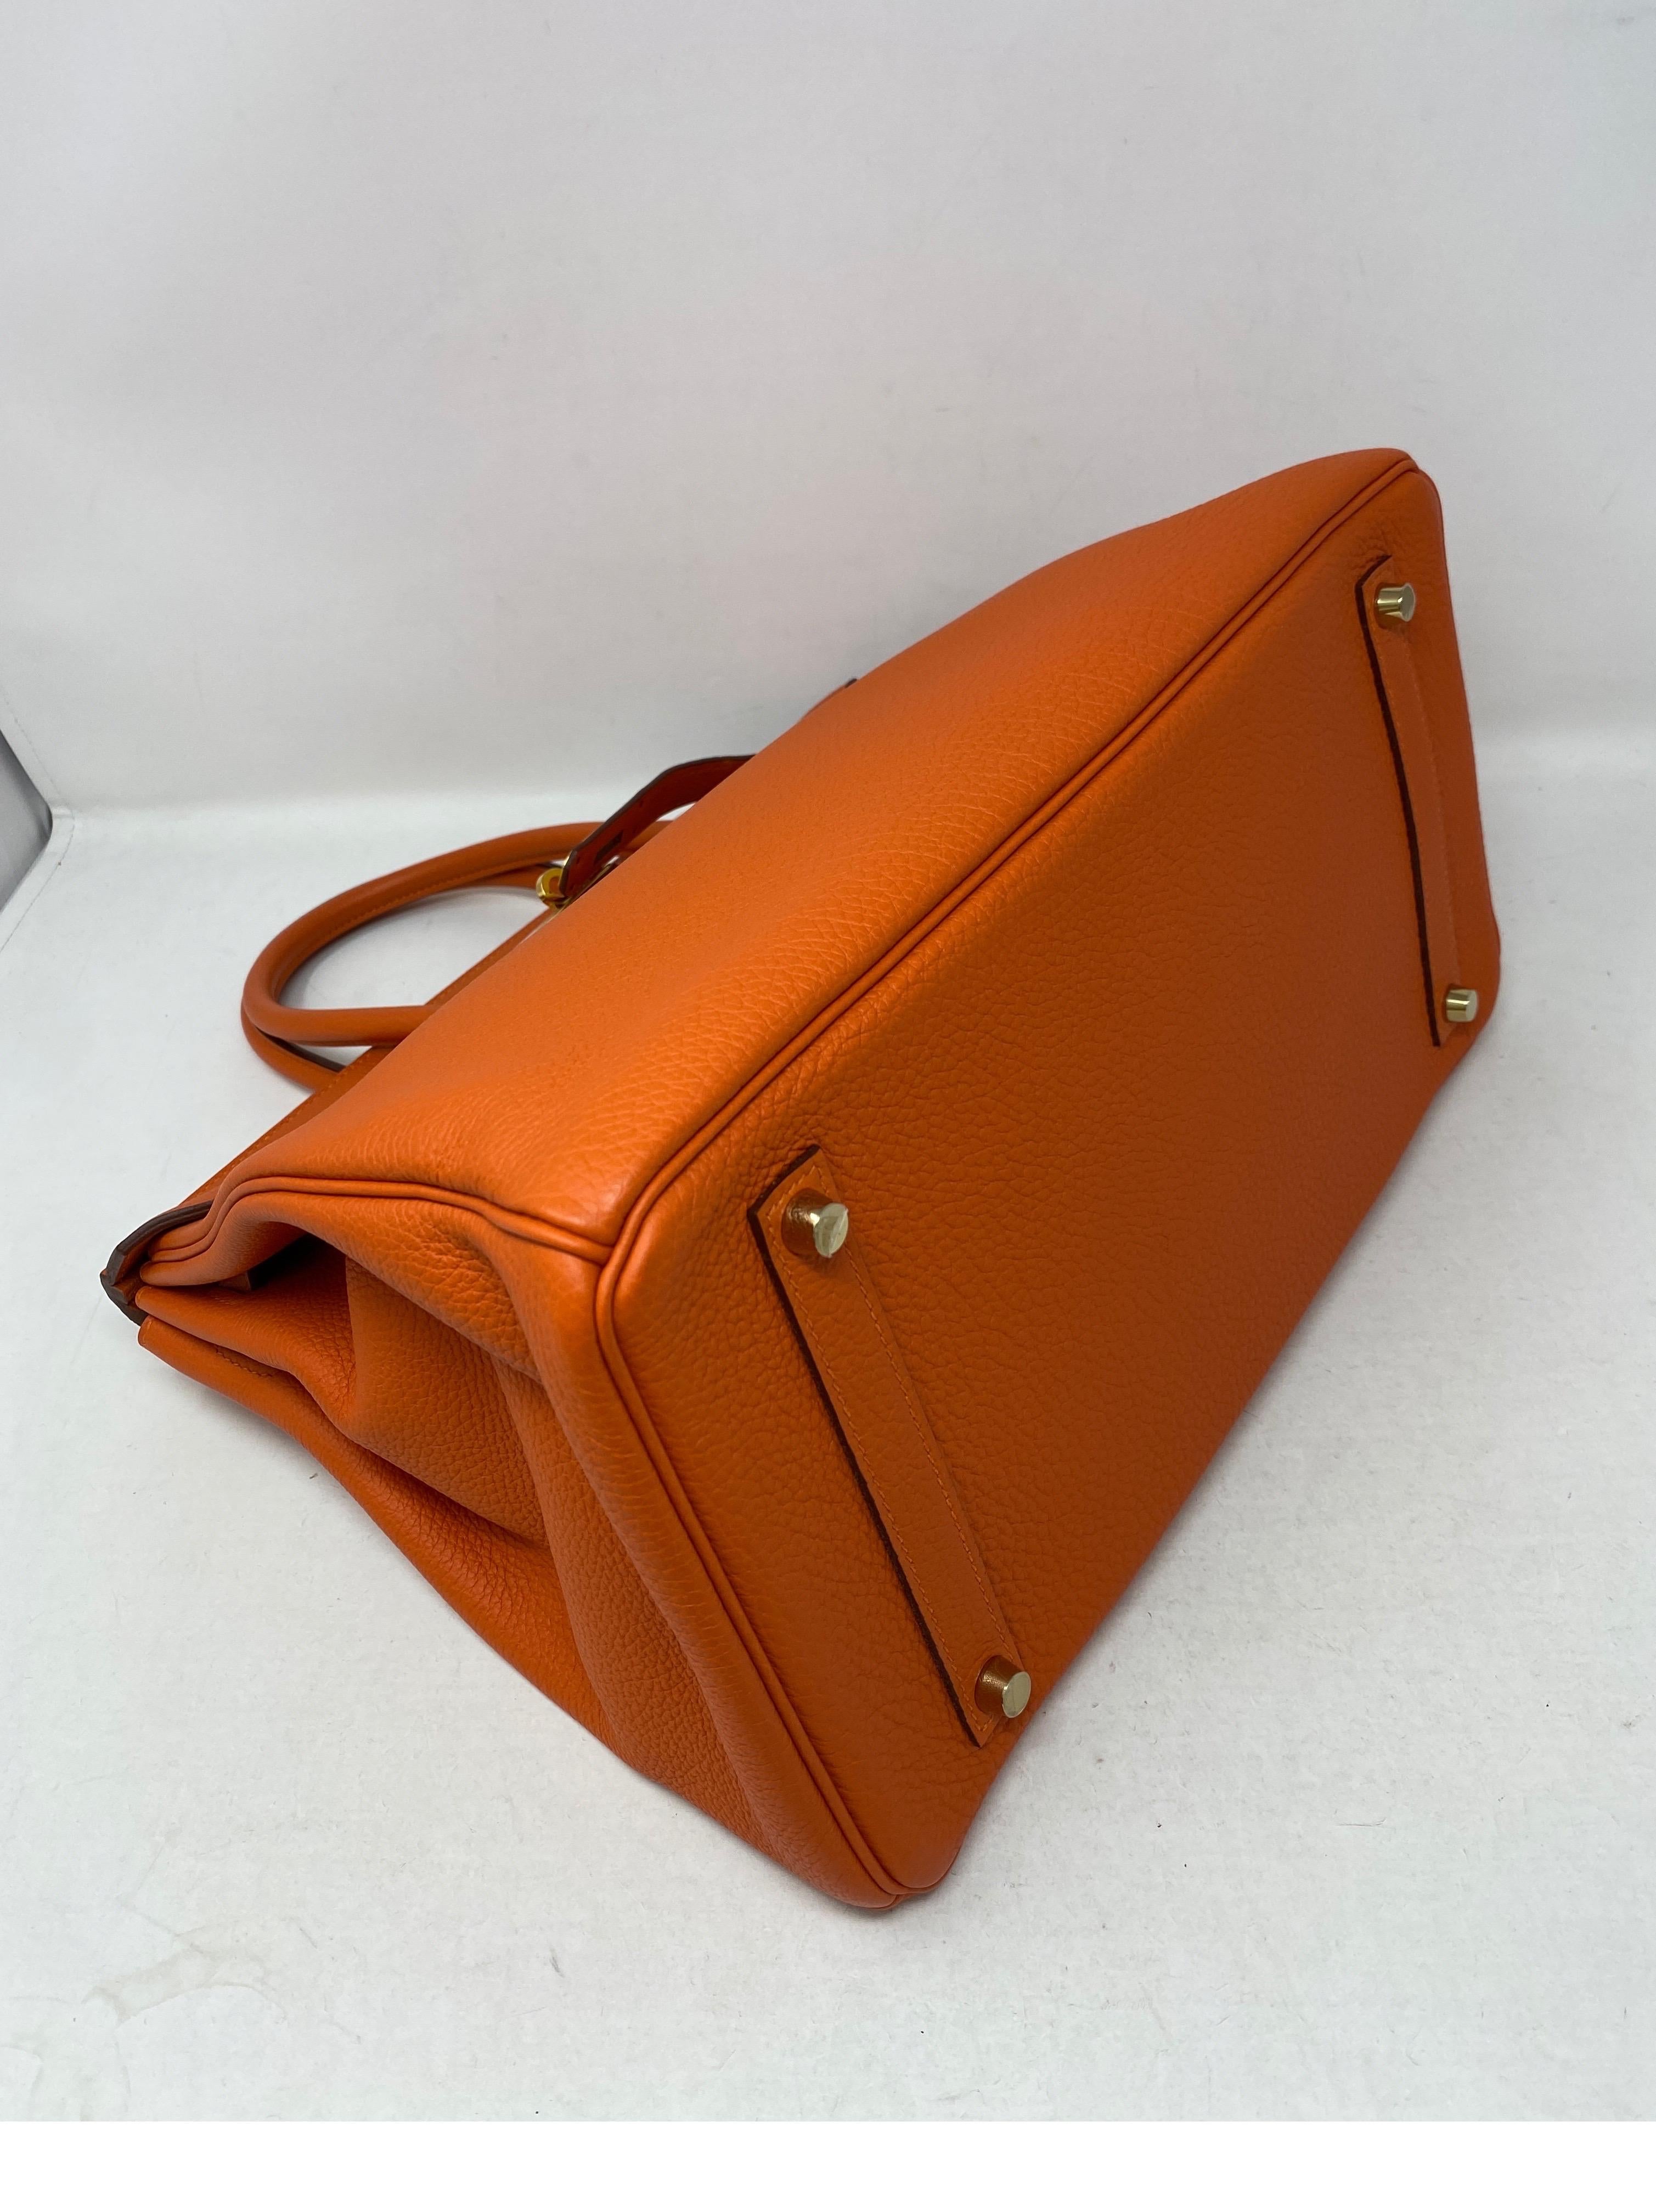 Women's or Men's Hermes Birkin Feu Orange 35 Bag